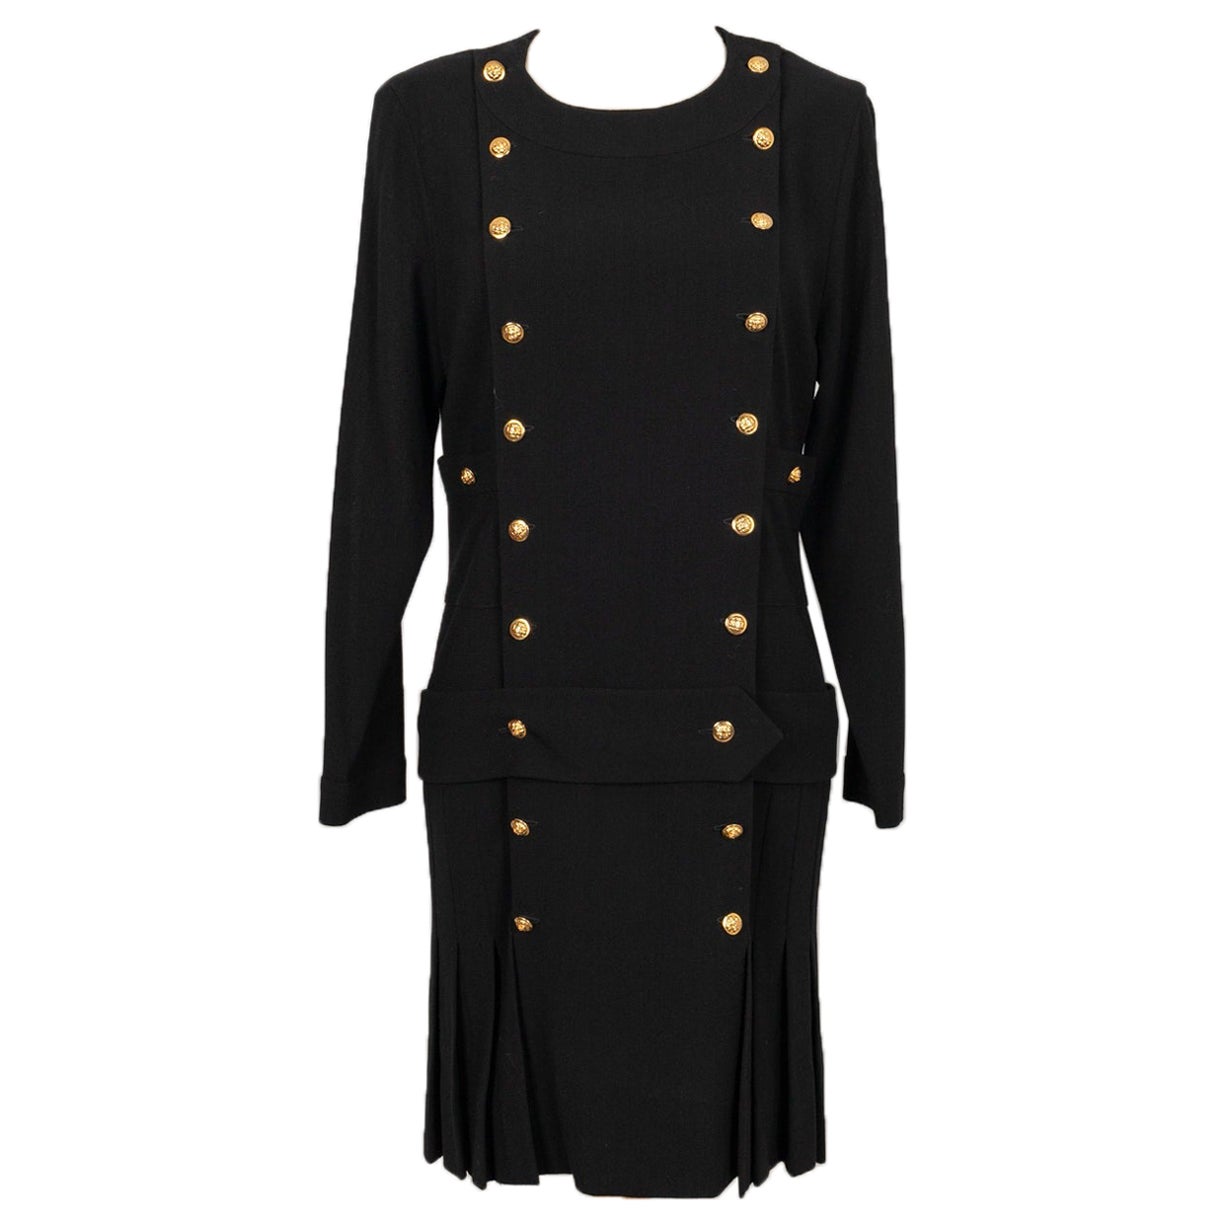 Chanel Long-Sleeved Black Dress, 1980S For Sale